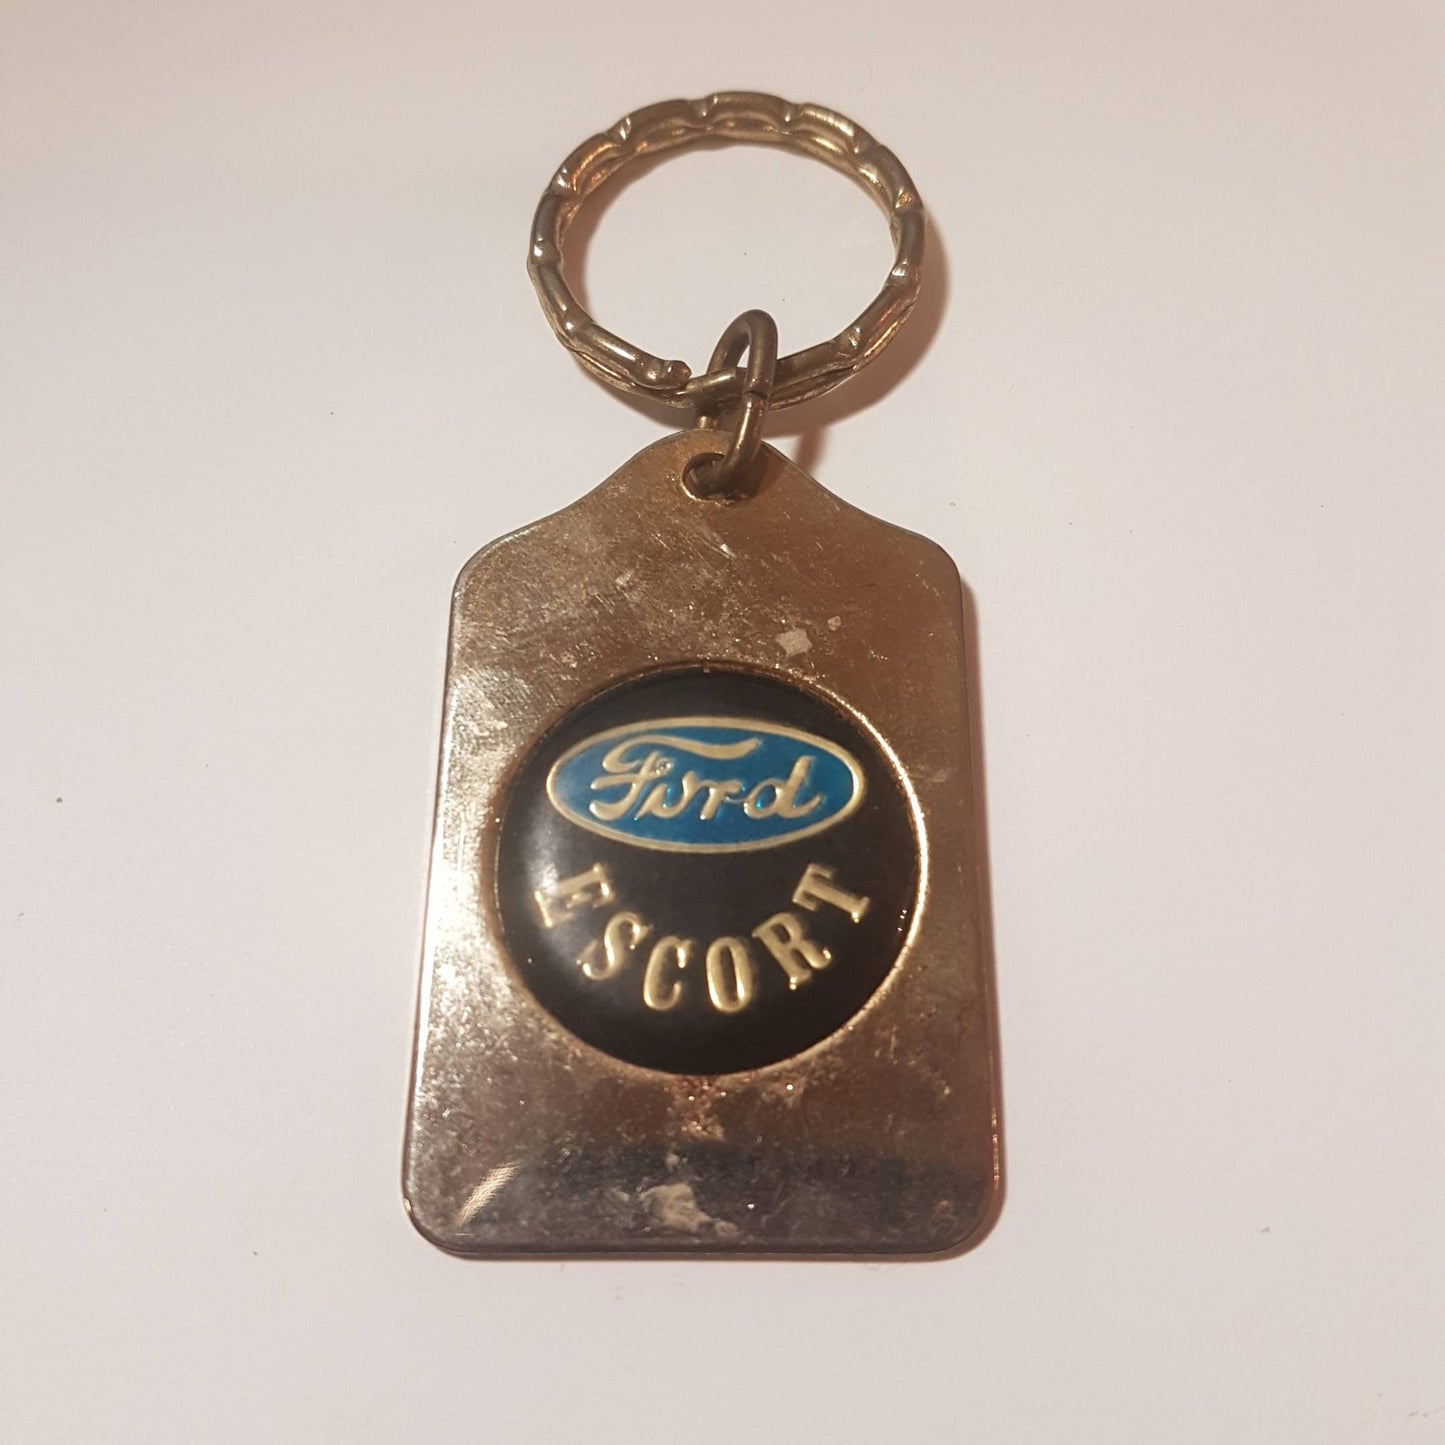 ford escort key chain keychain key fob keytag vintage automotove keychain gift collectible